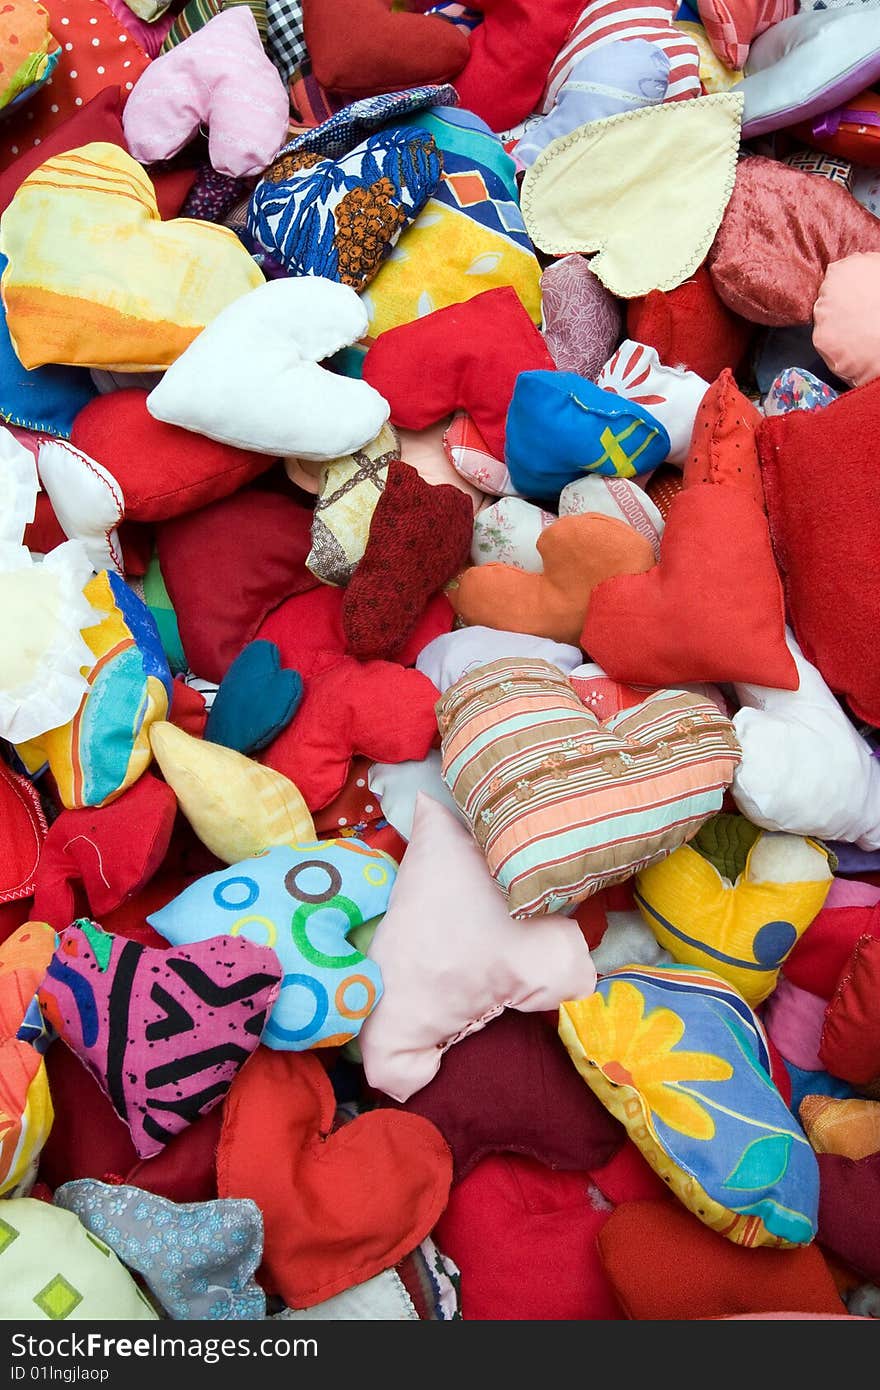 Big pile of stuffed hearts - big and tiny